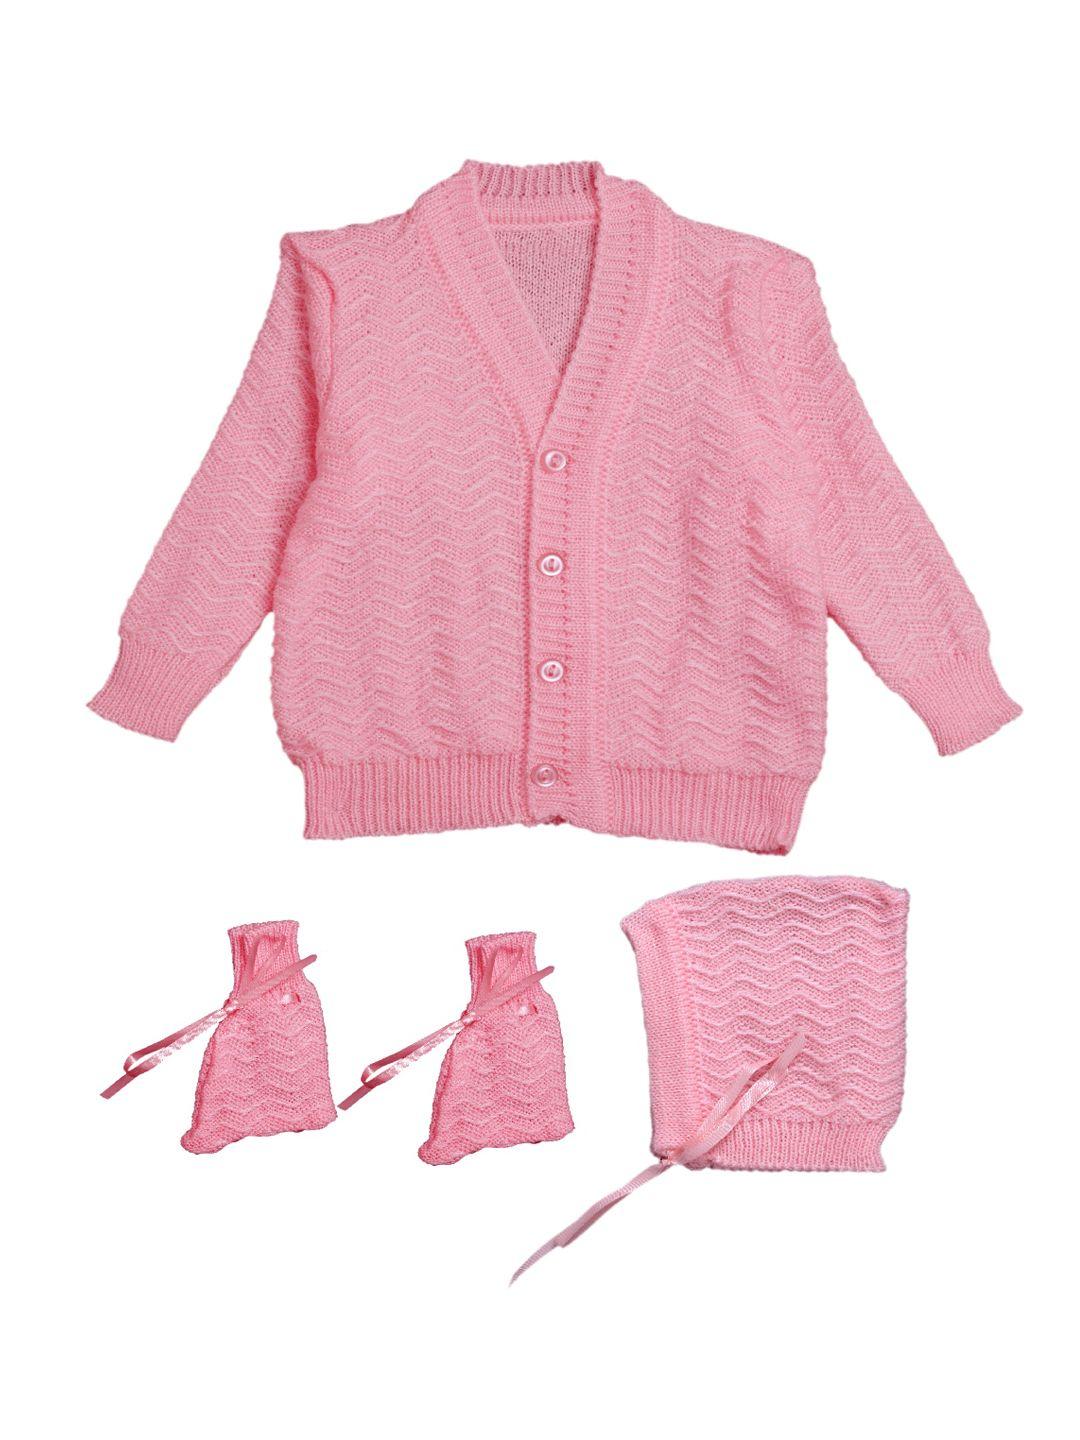 little angels unisex kids pink striped cardigan sweater